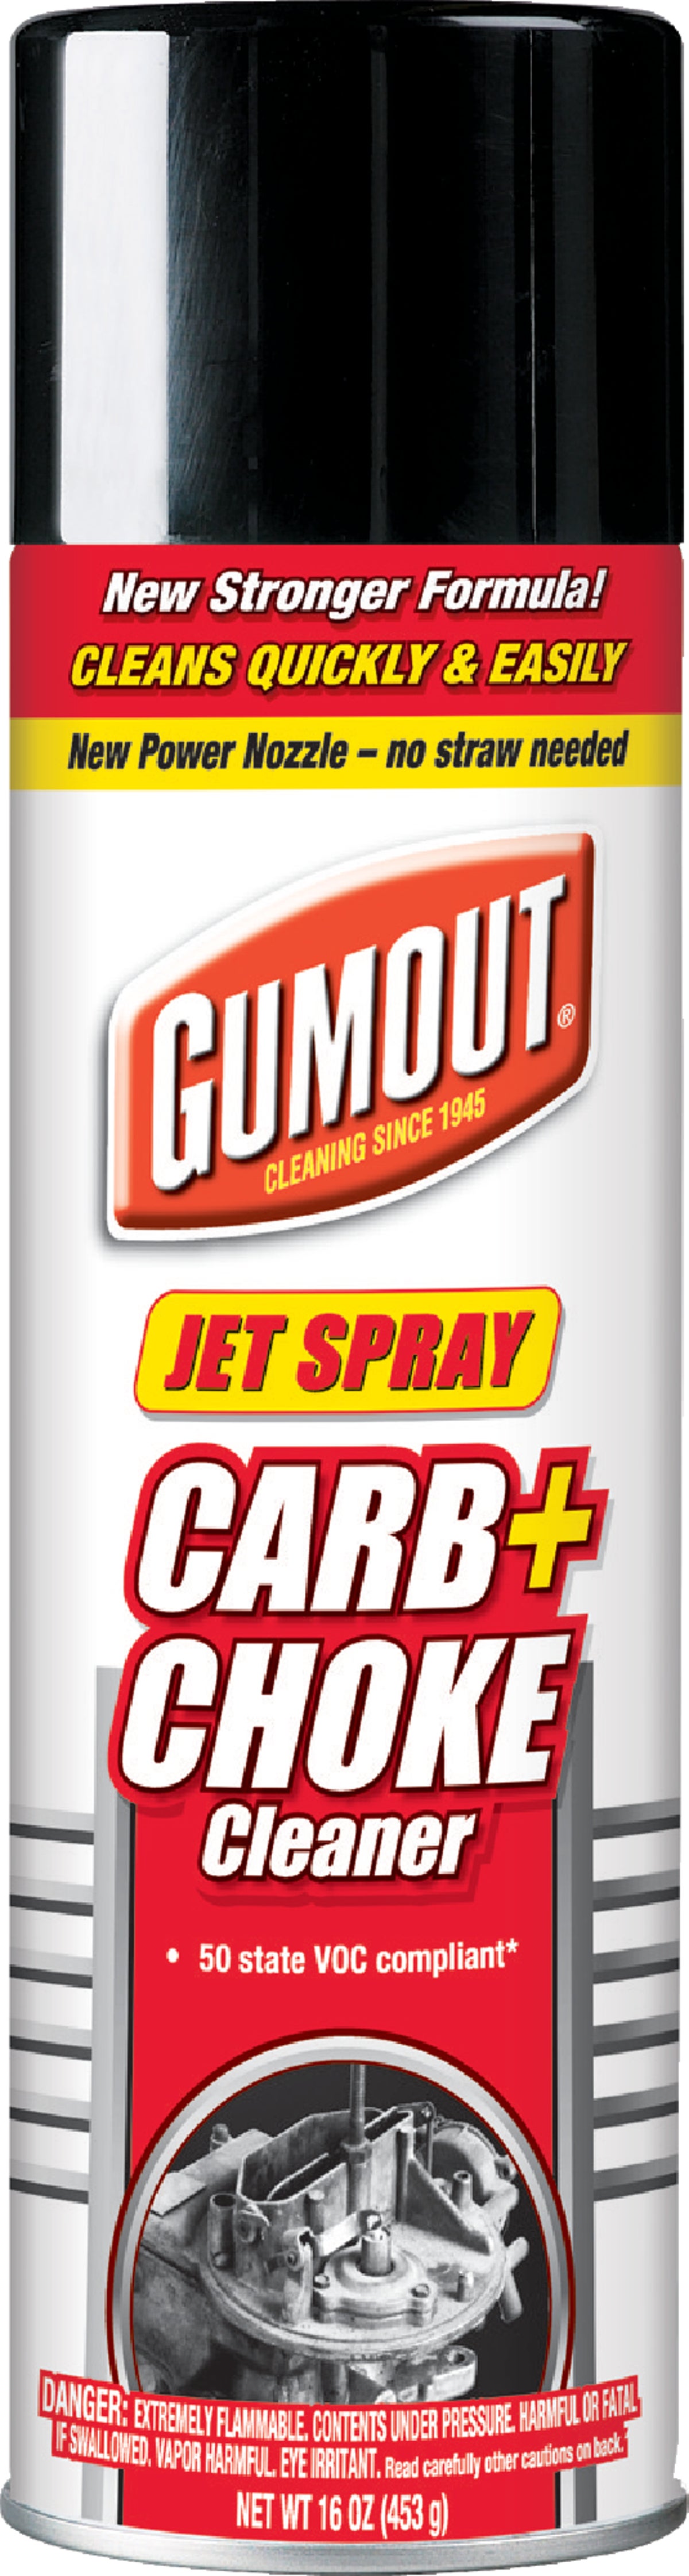 Buy GUMOUT Choke & Carburetor Cleaner Jet Spray 16 Oz.